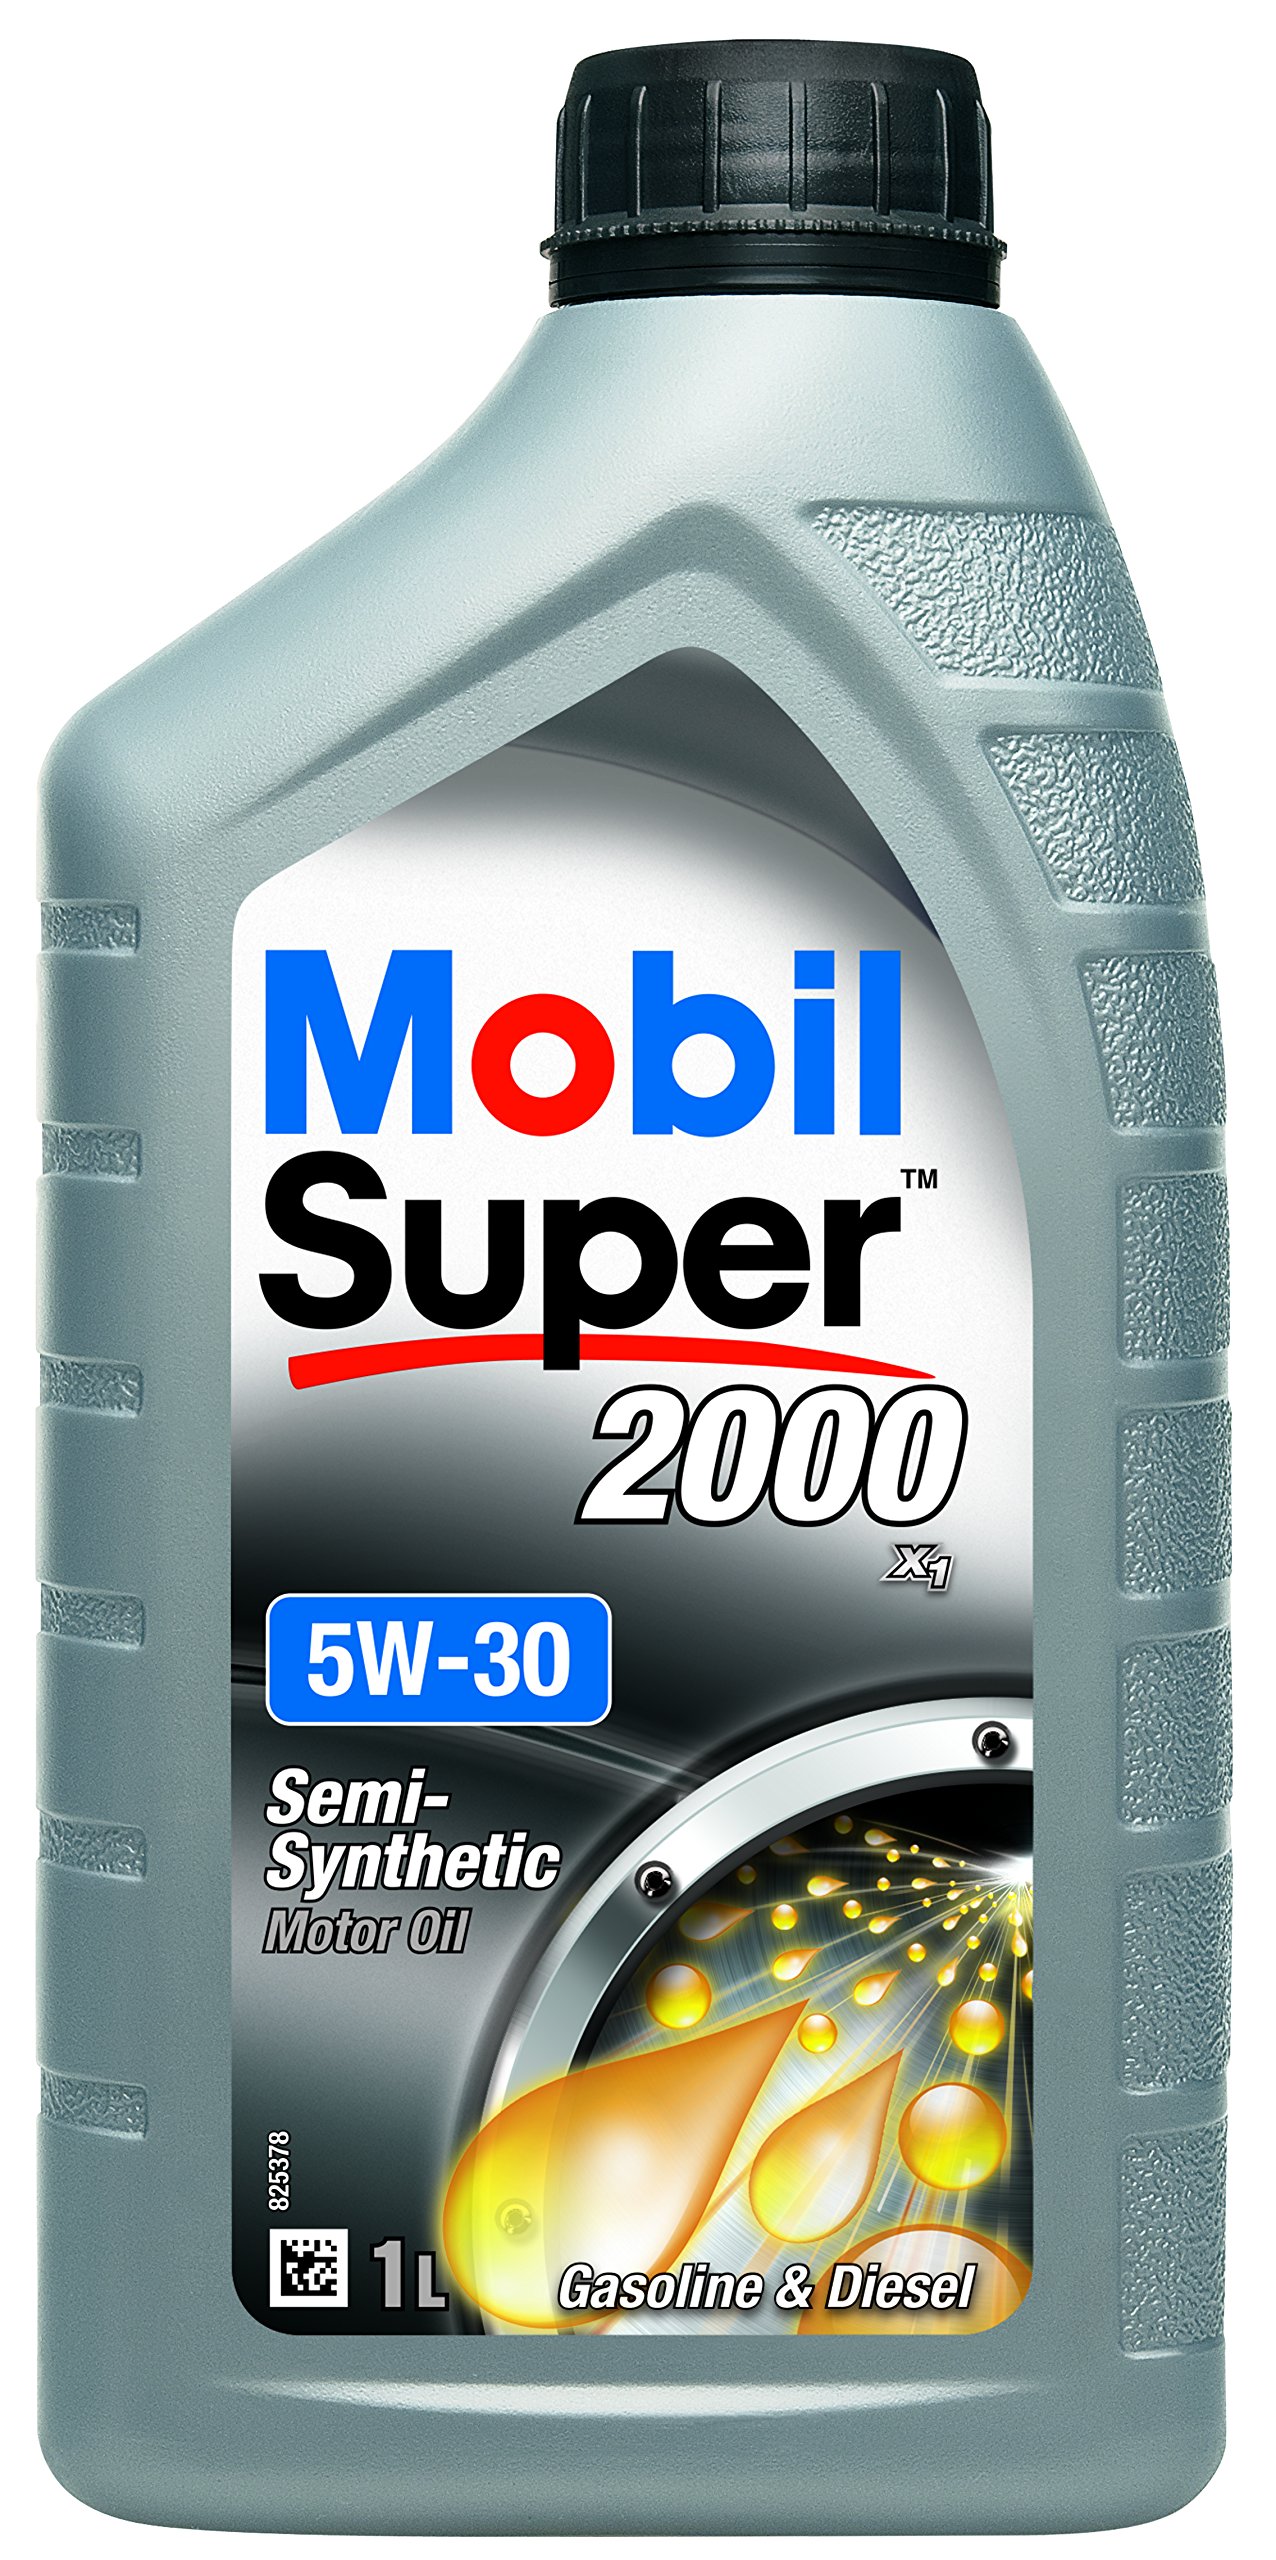 Mobil Super 2000 X1 5W-30 Engine Oil, 1L von Mobil